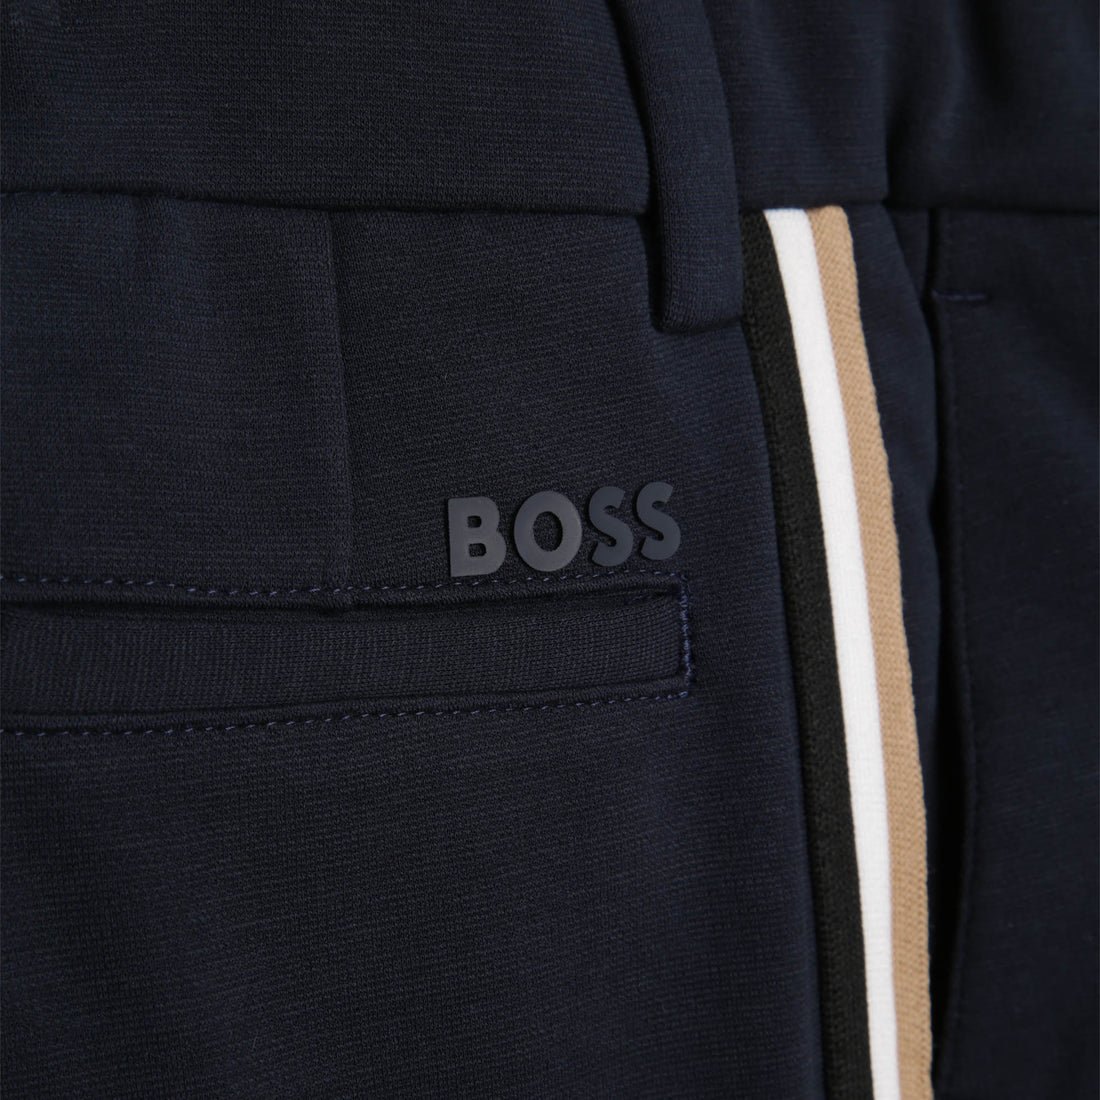 Boss Trousers Style: J24791